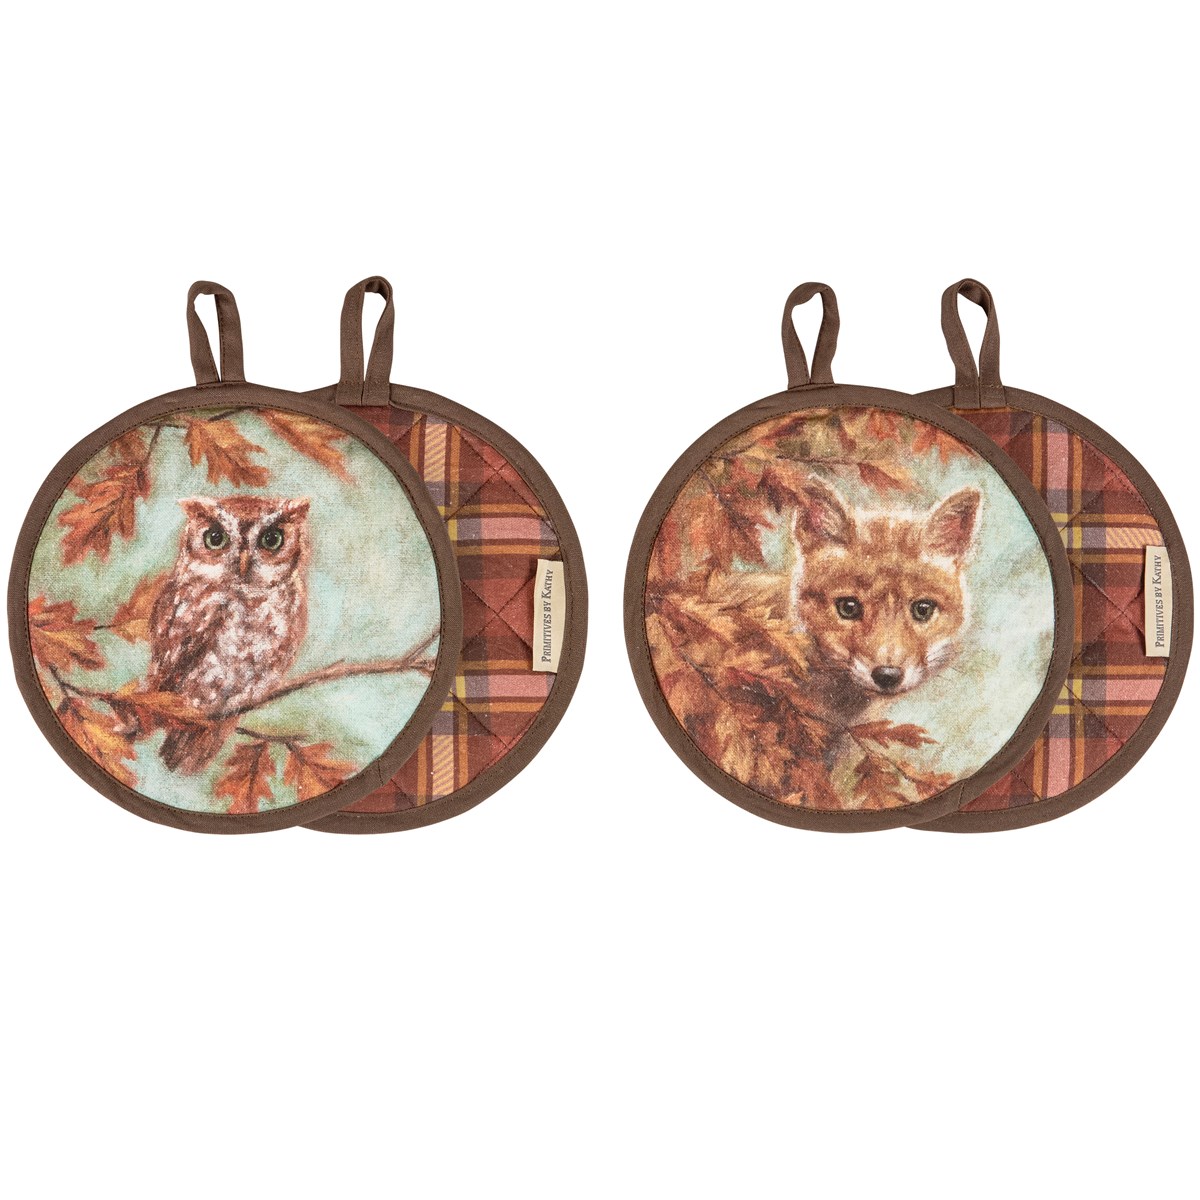 Fox And Owl Hot Pad Set - Cotton